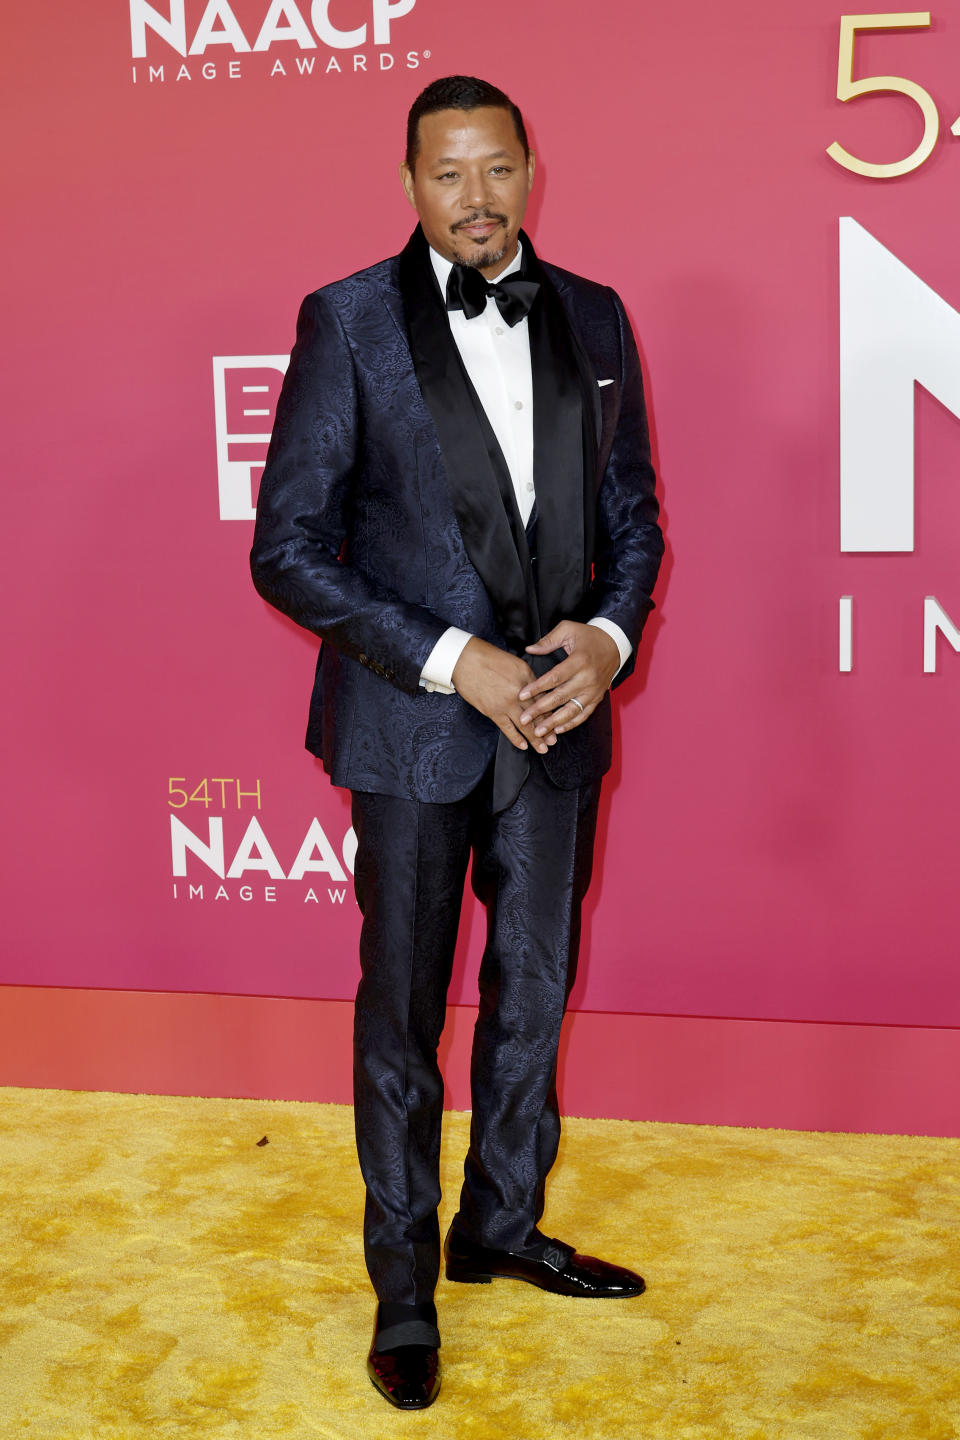 Terrence Howard wearing suit